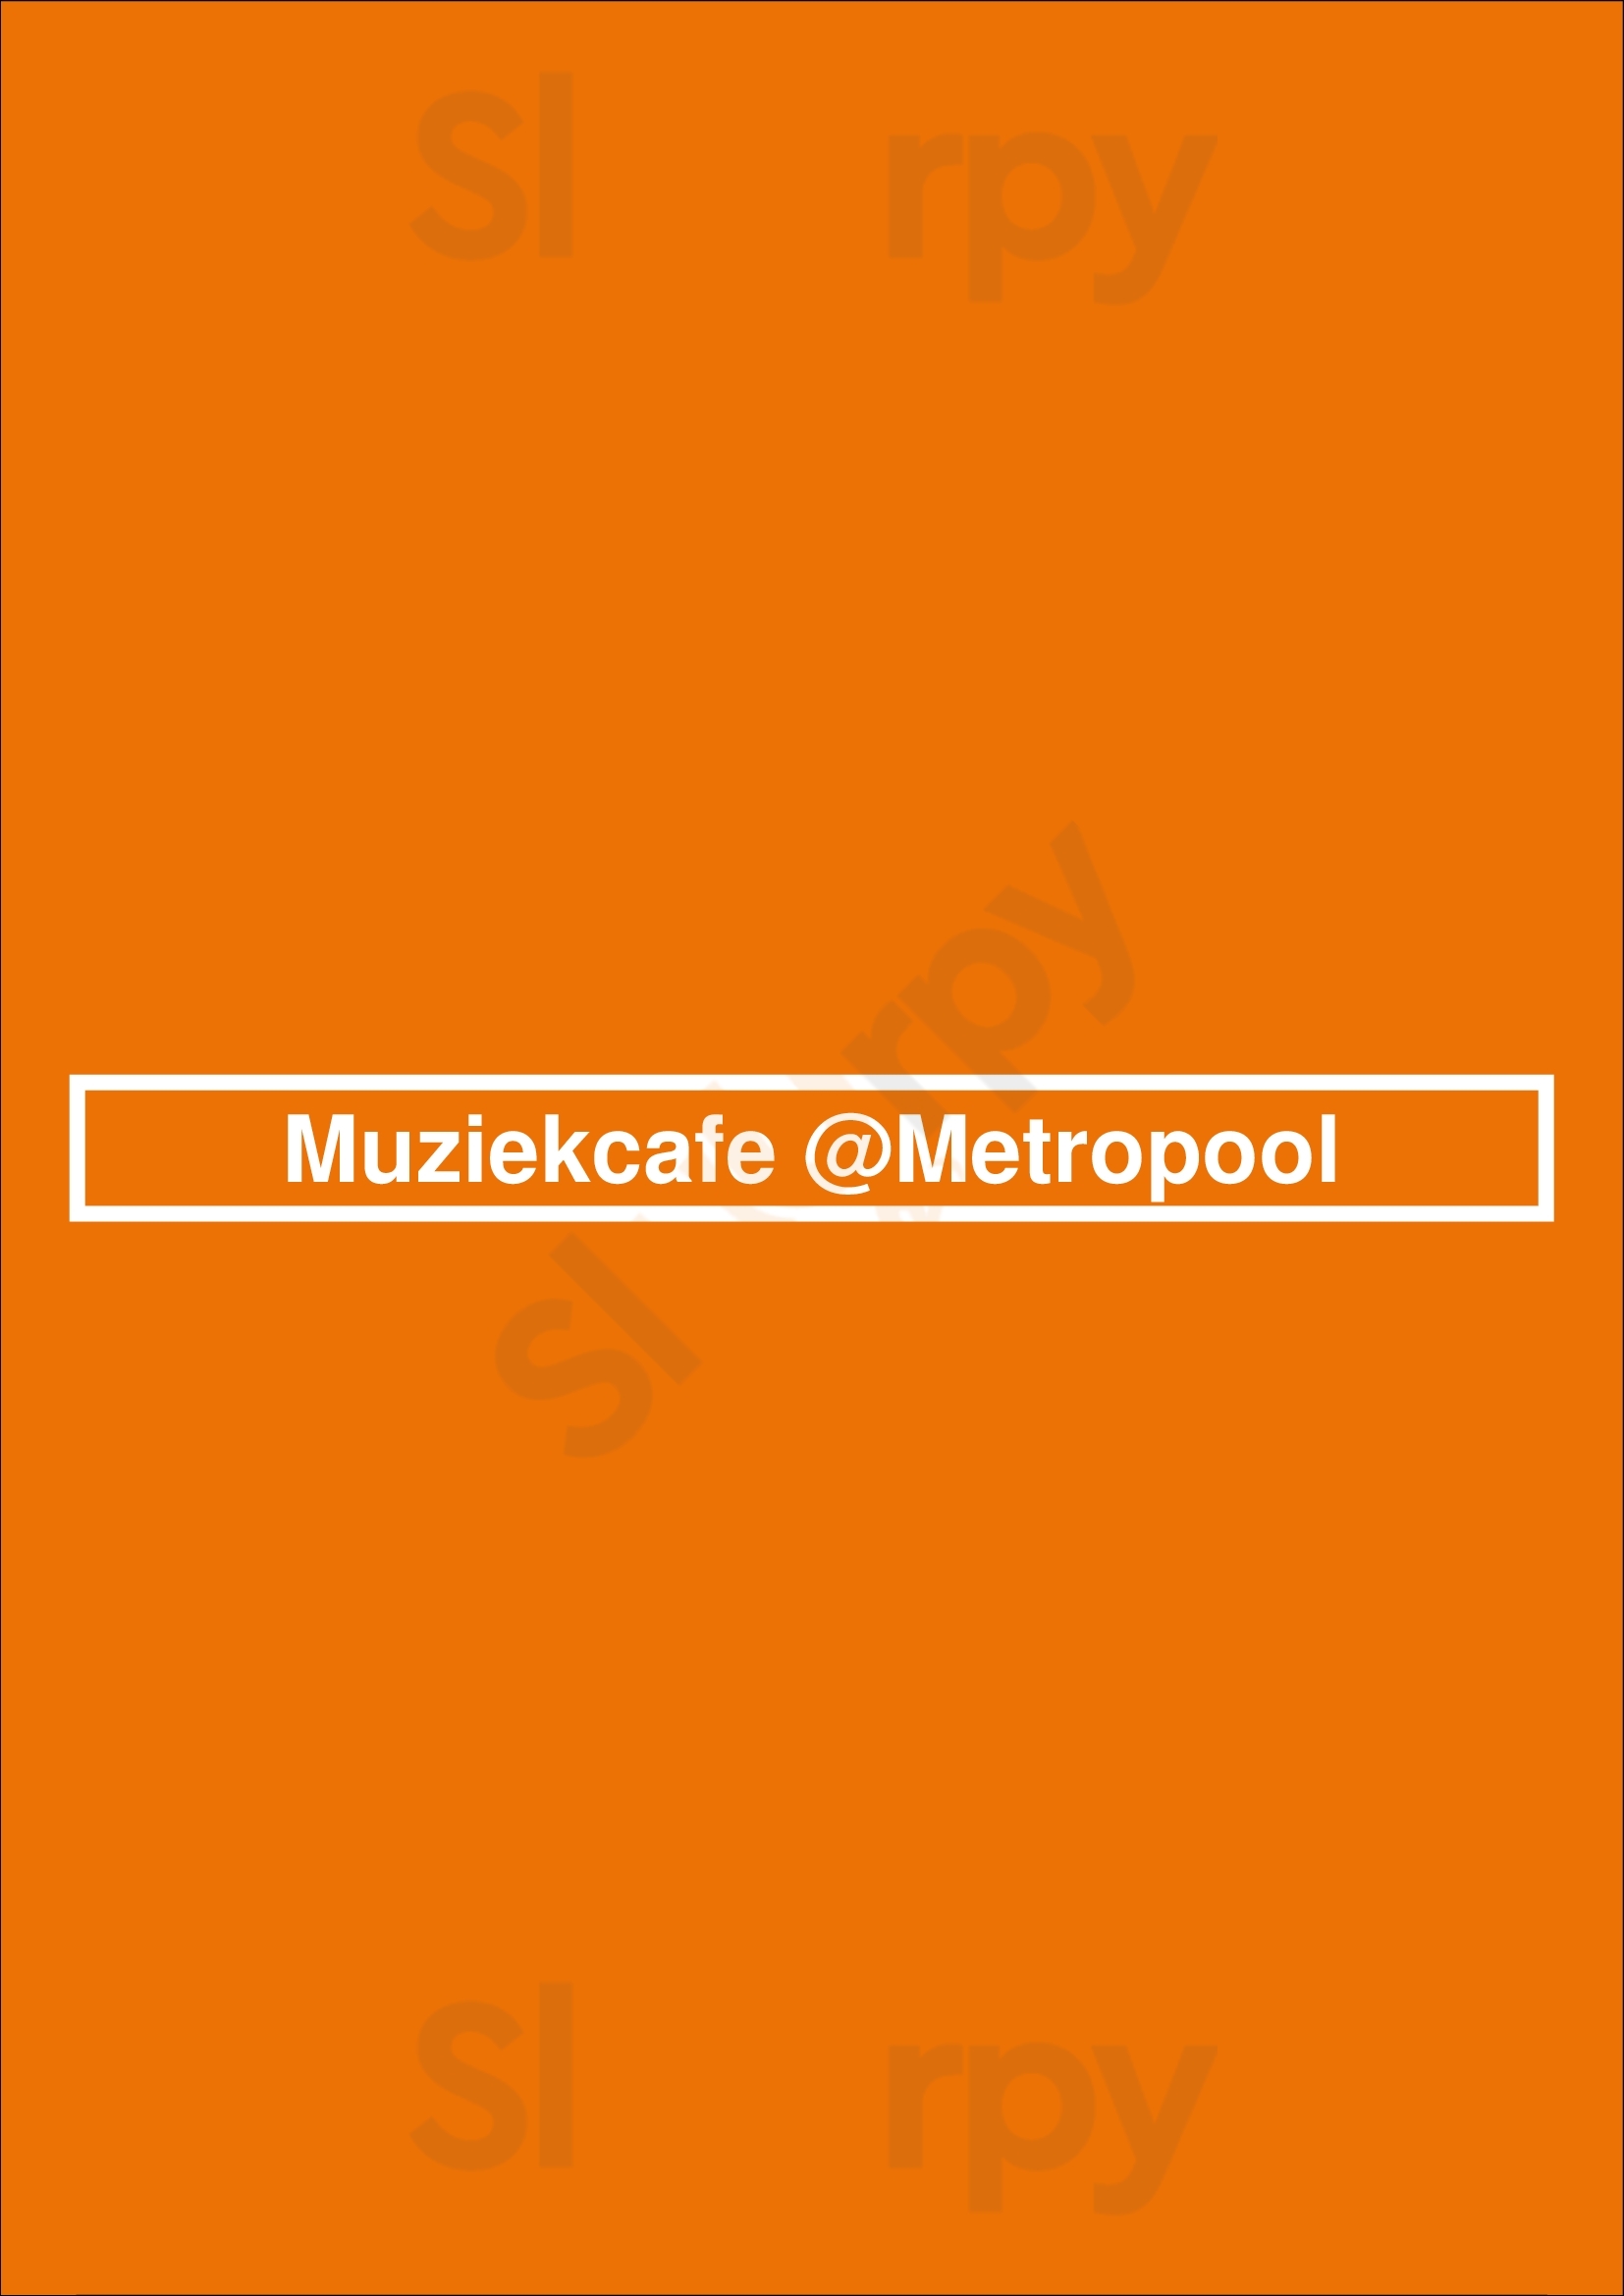 Muziekcafe @metropool Hengelo Menu - 1